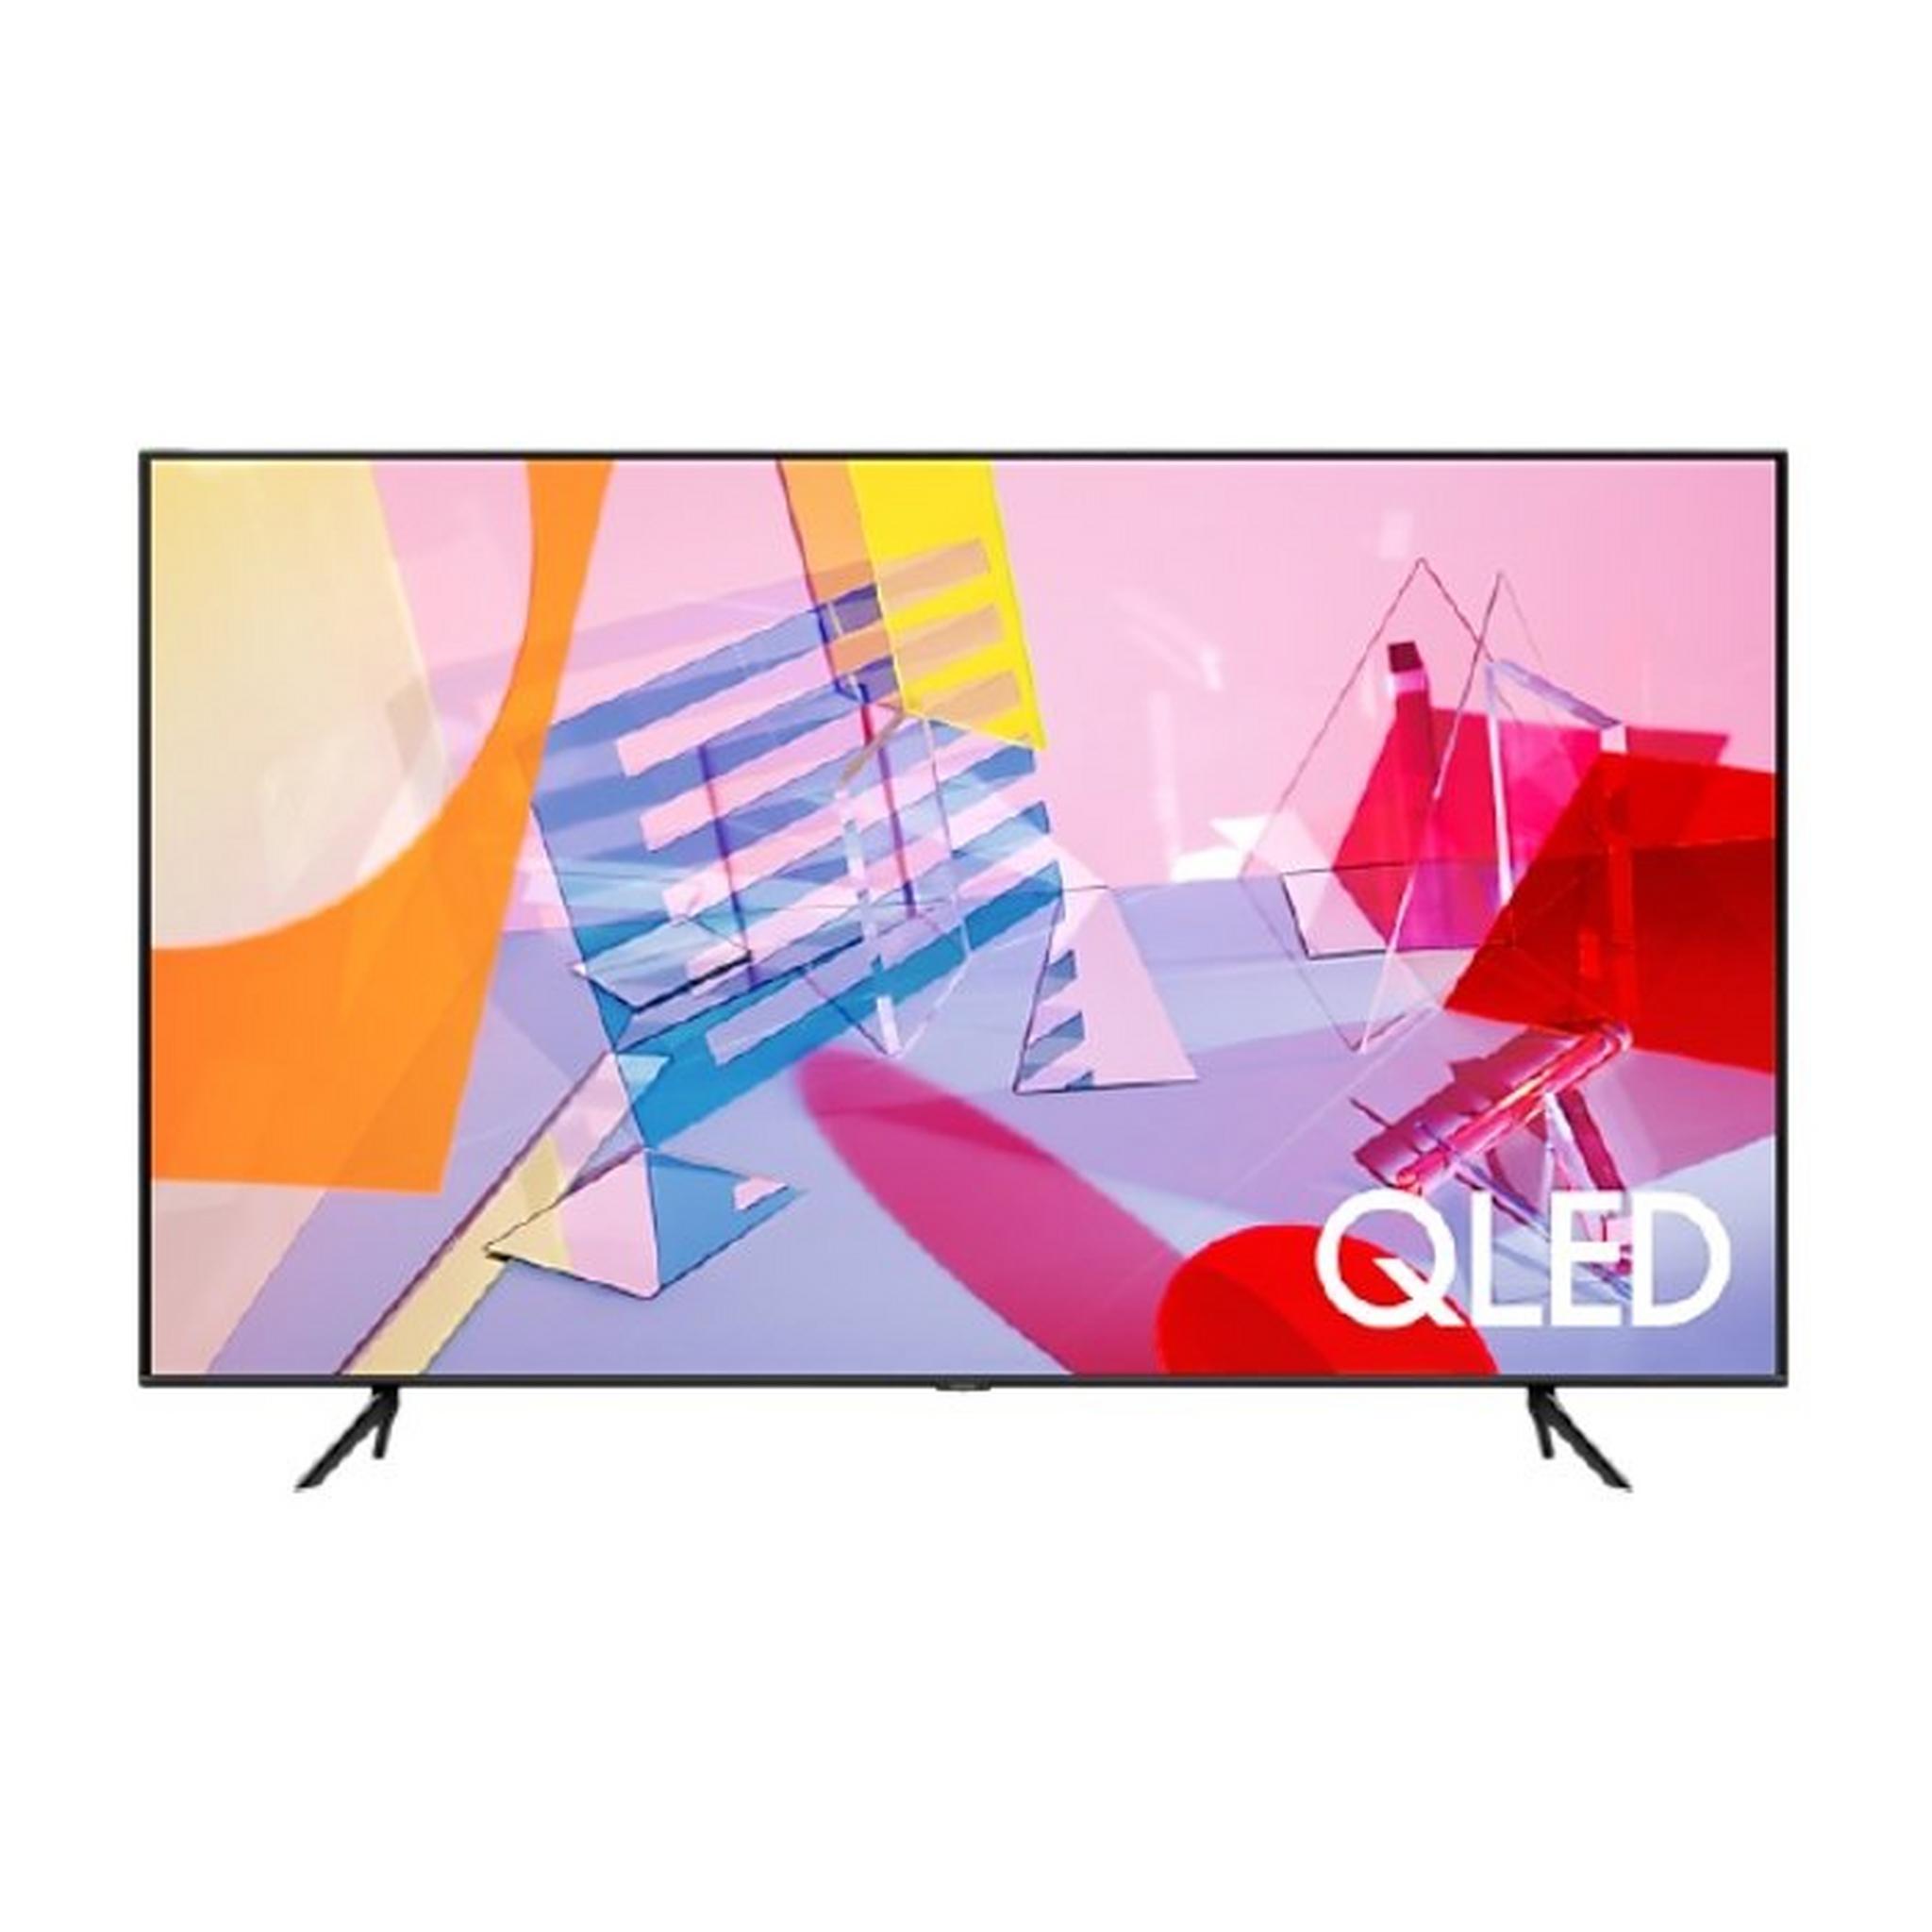 Samsung 55-inch UHD 4K Smart QLED TV (QA55Q60)